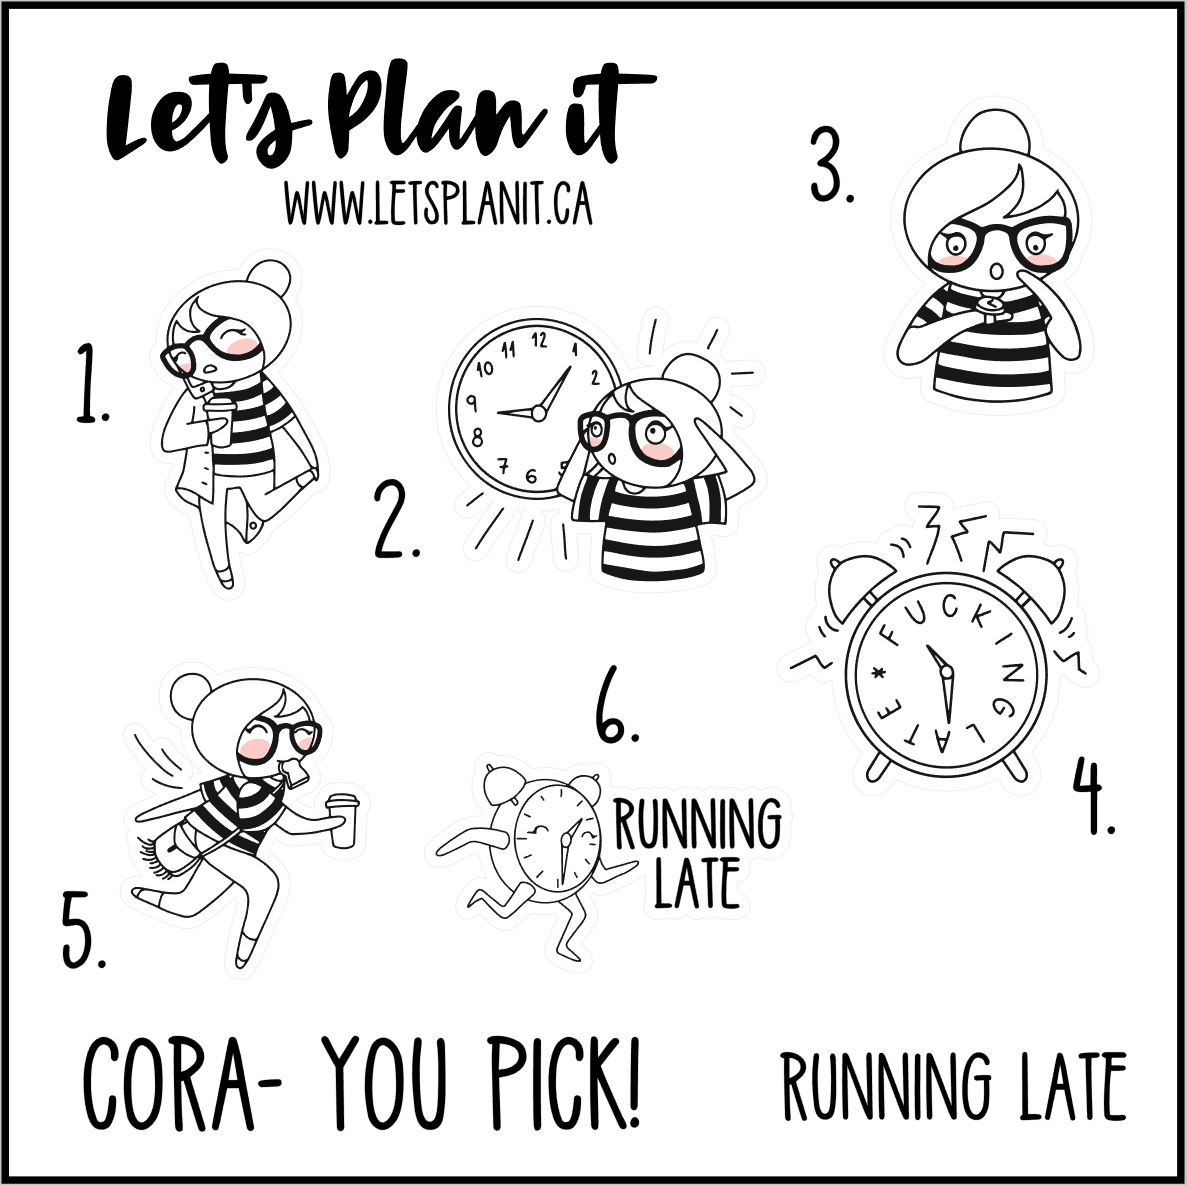 Cora-u-pick- Running Late